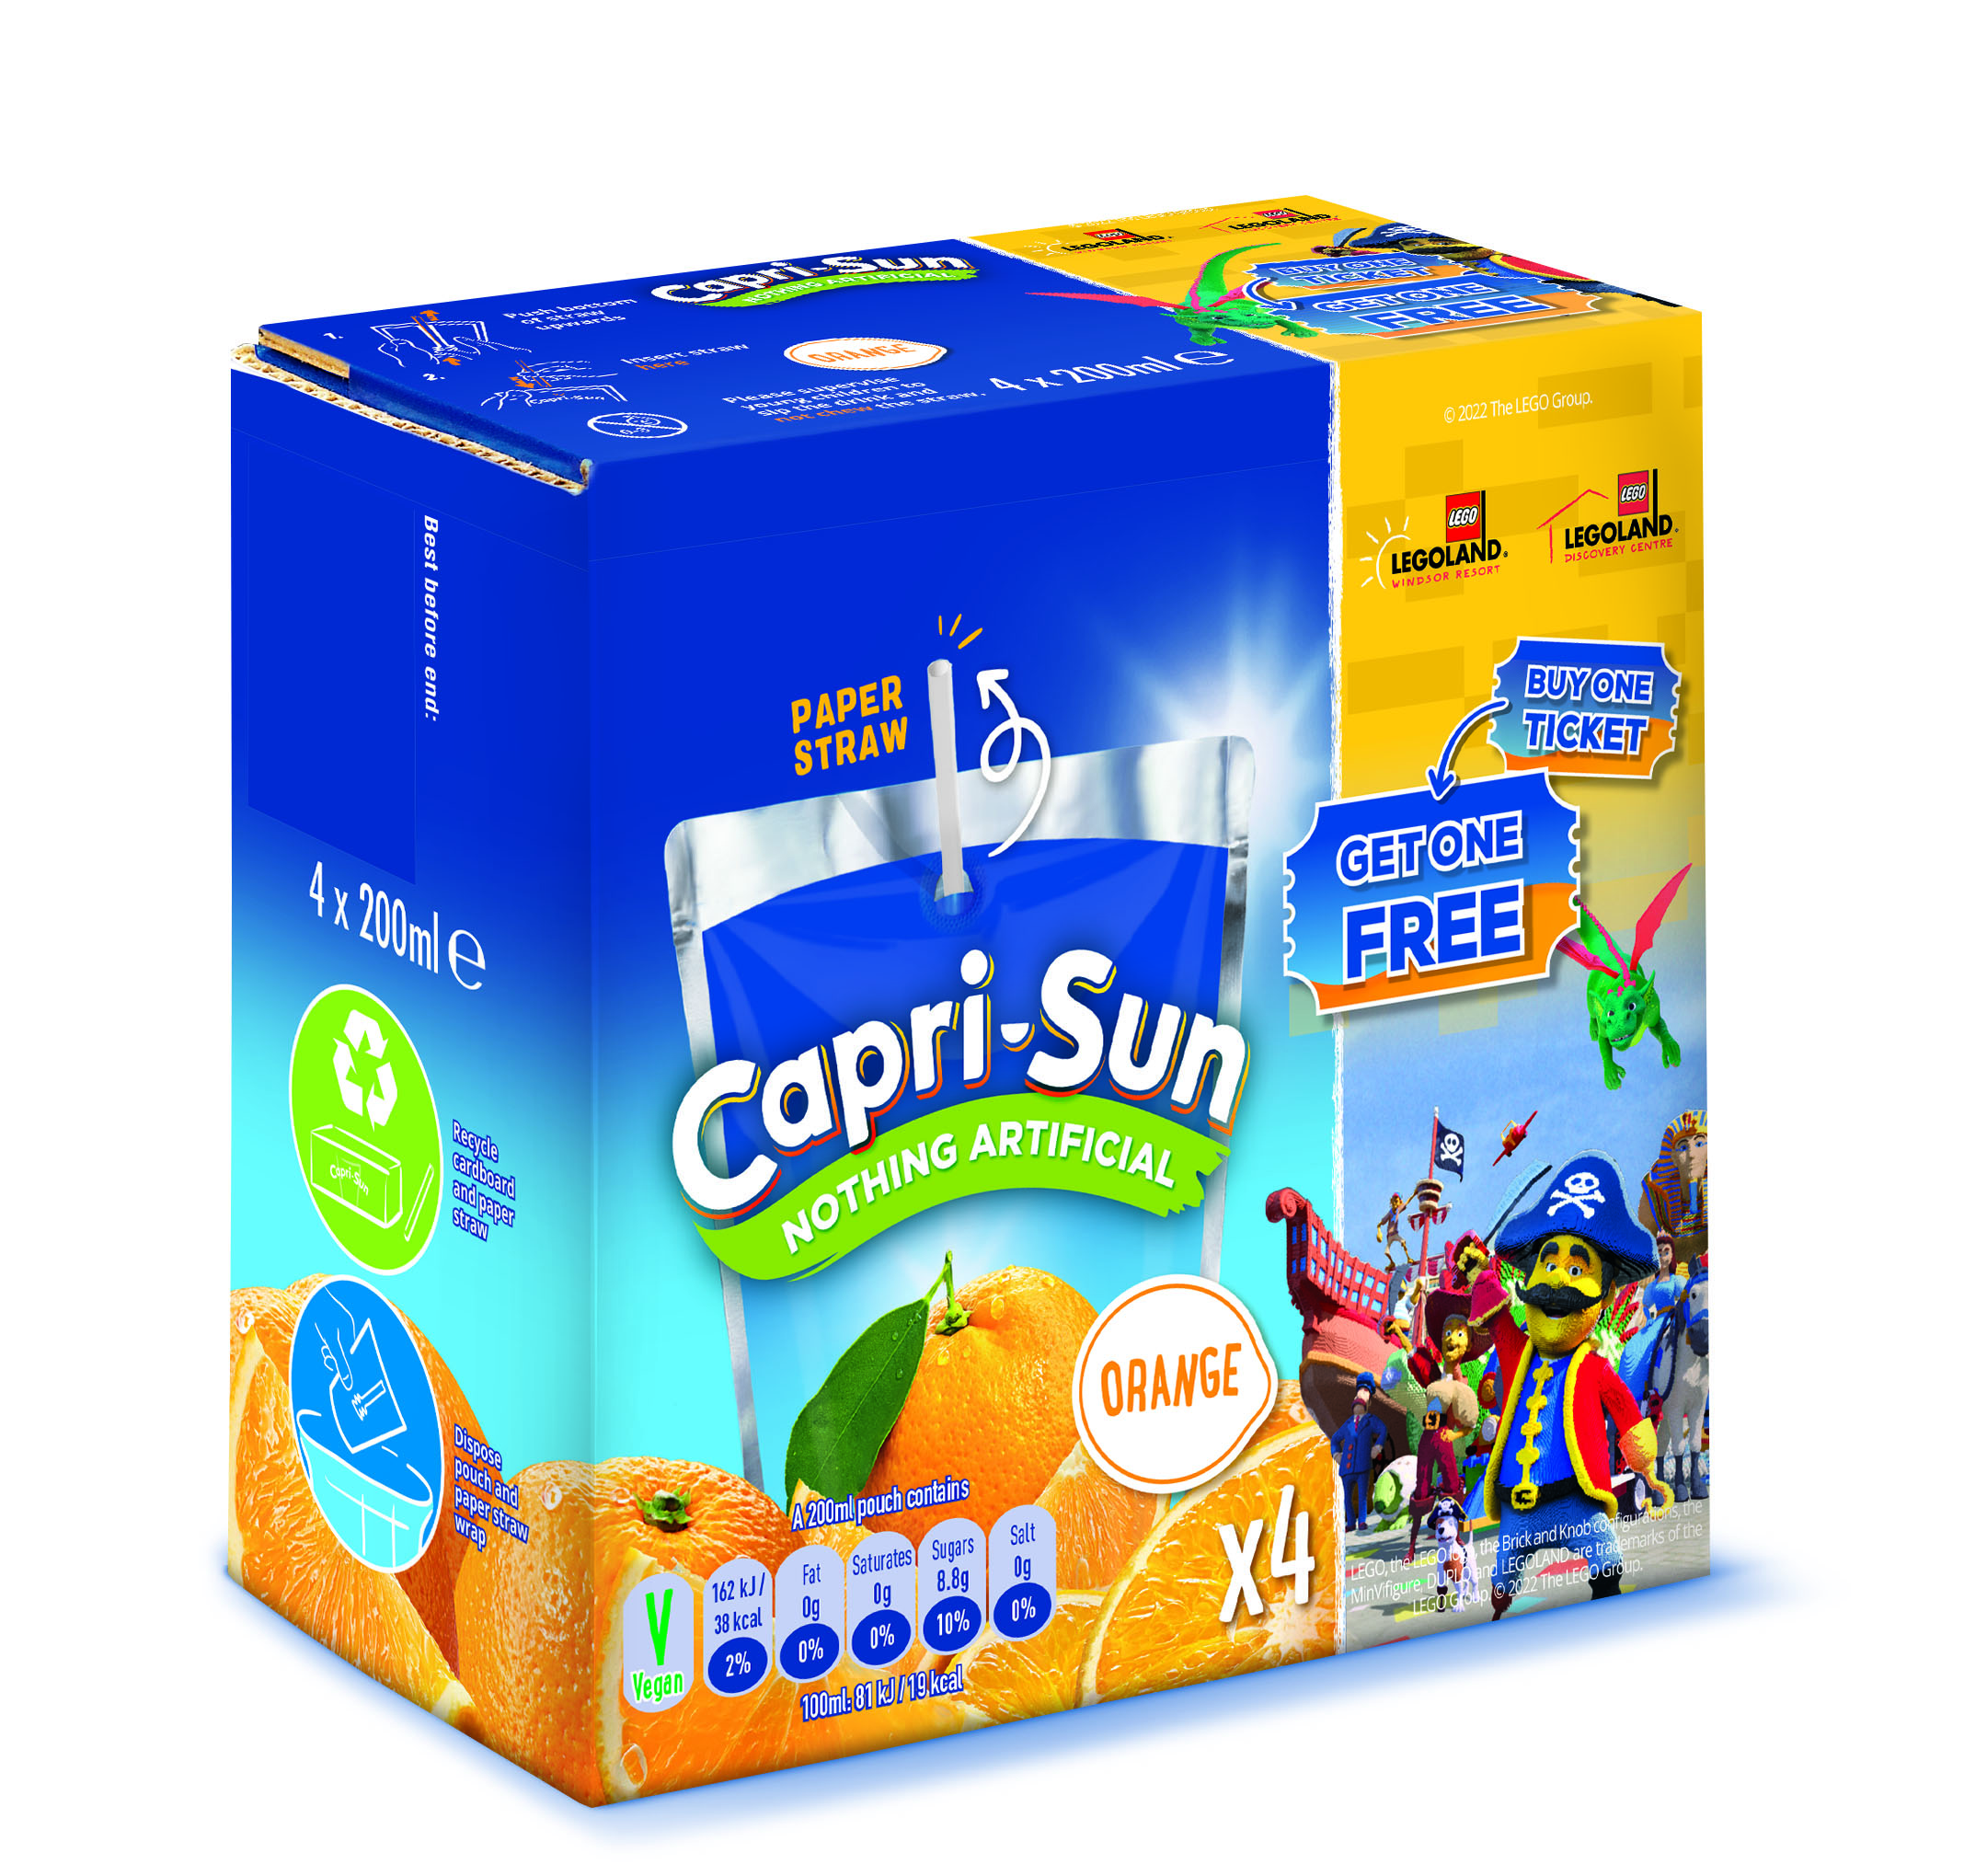 Capri-Sun brings back Legoland on-pack promotion this summer